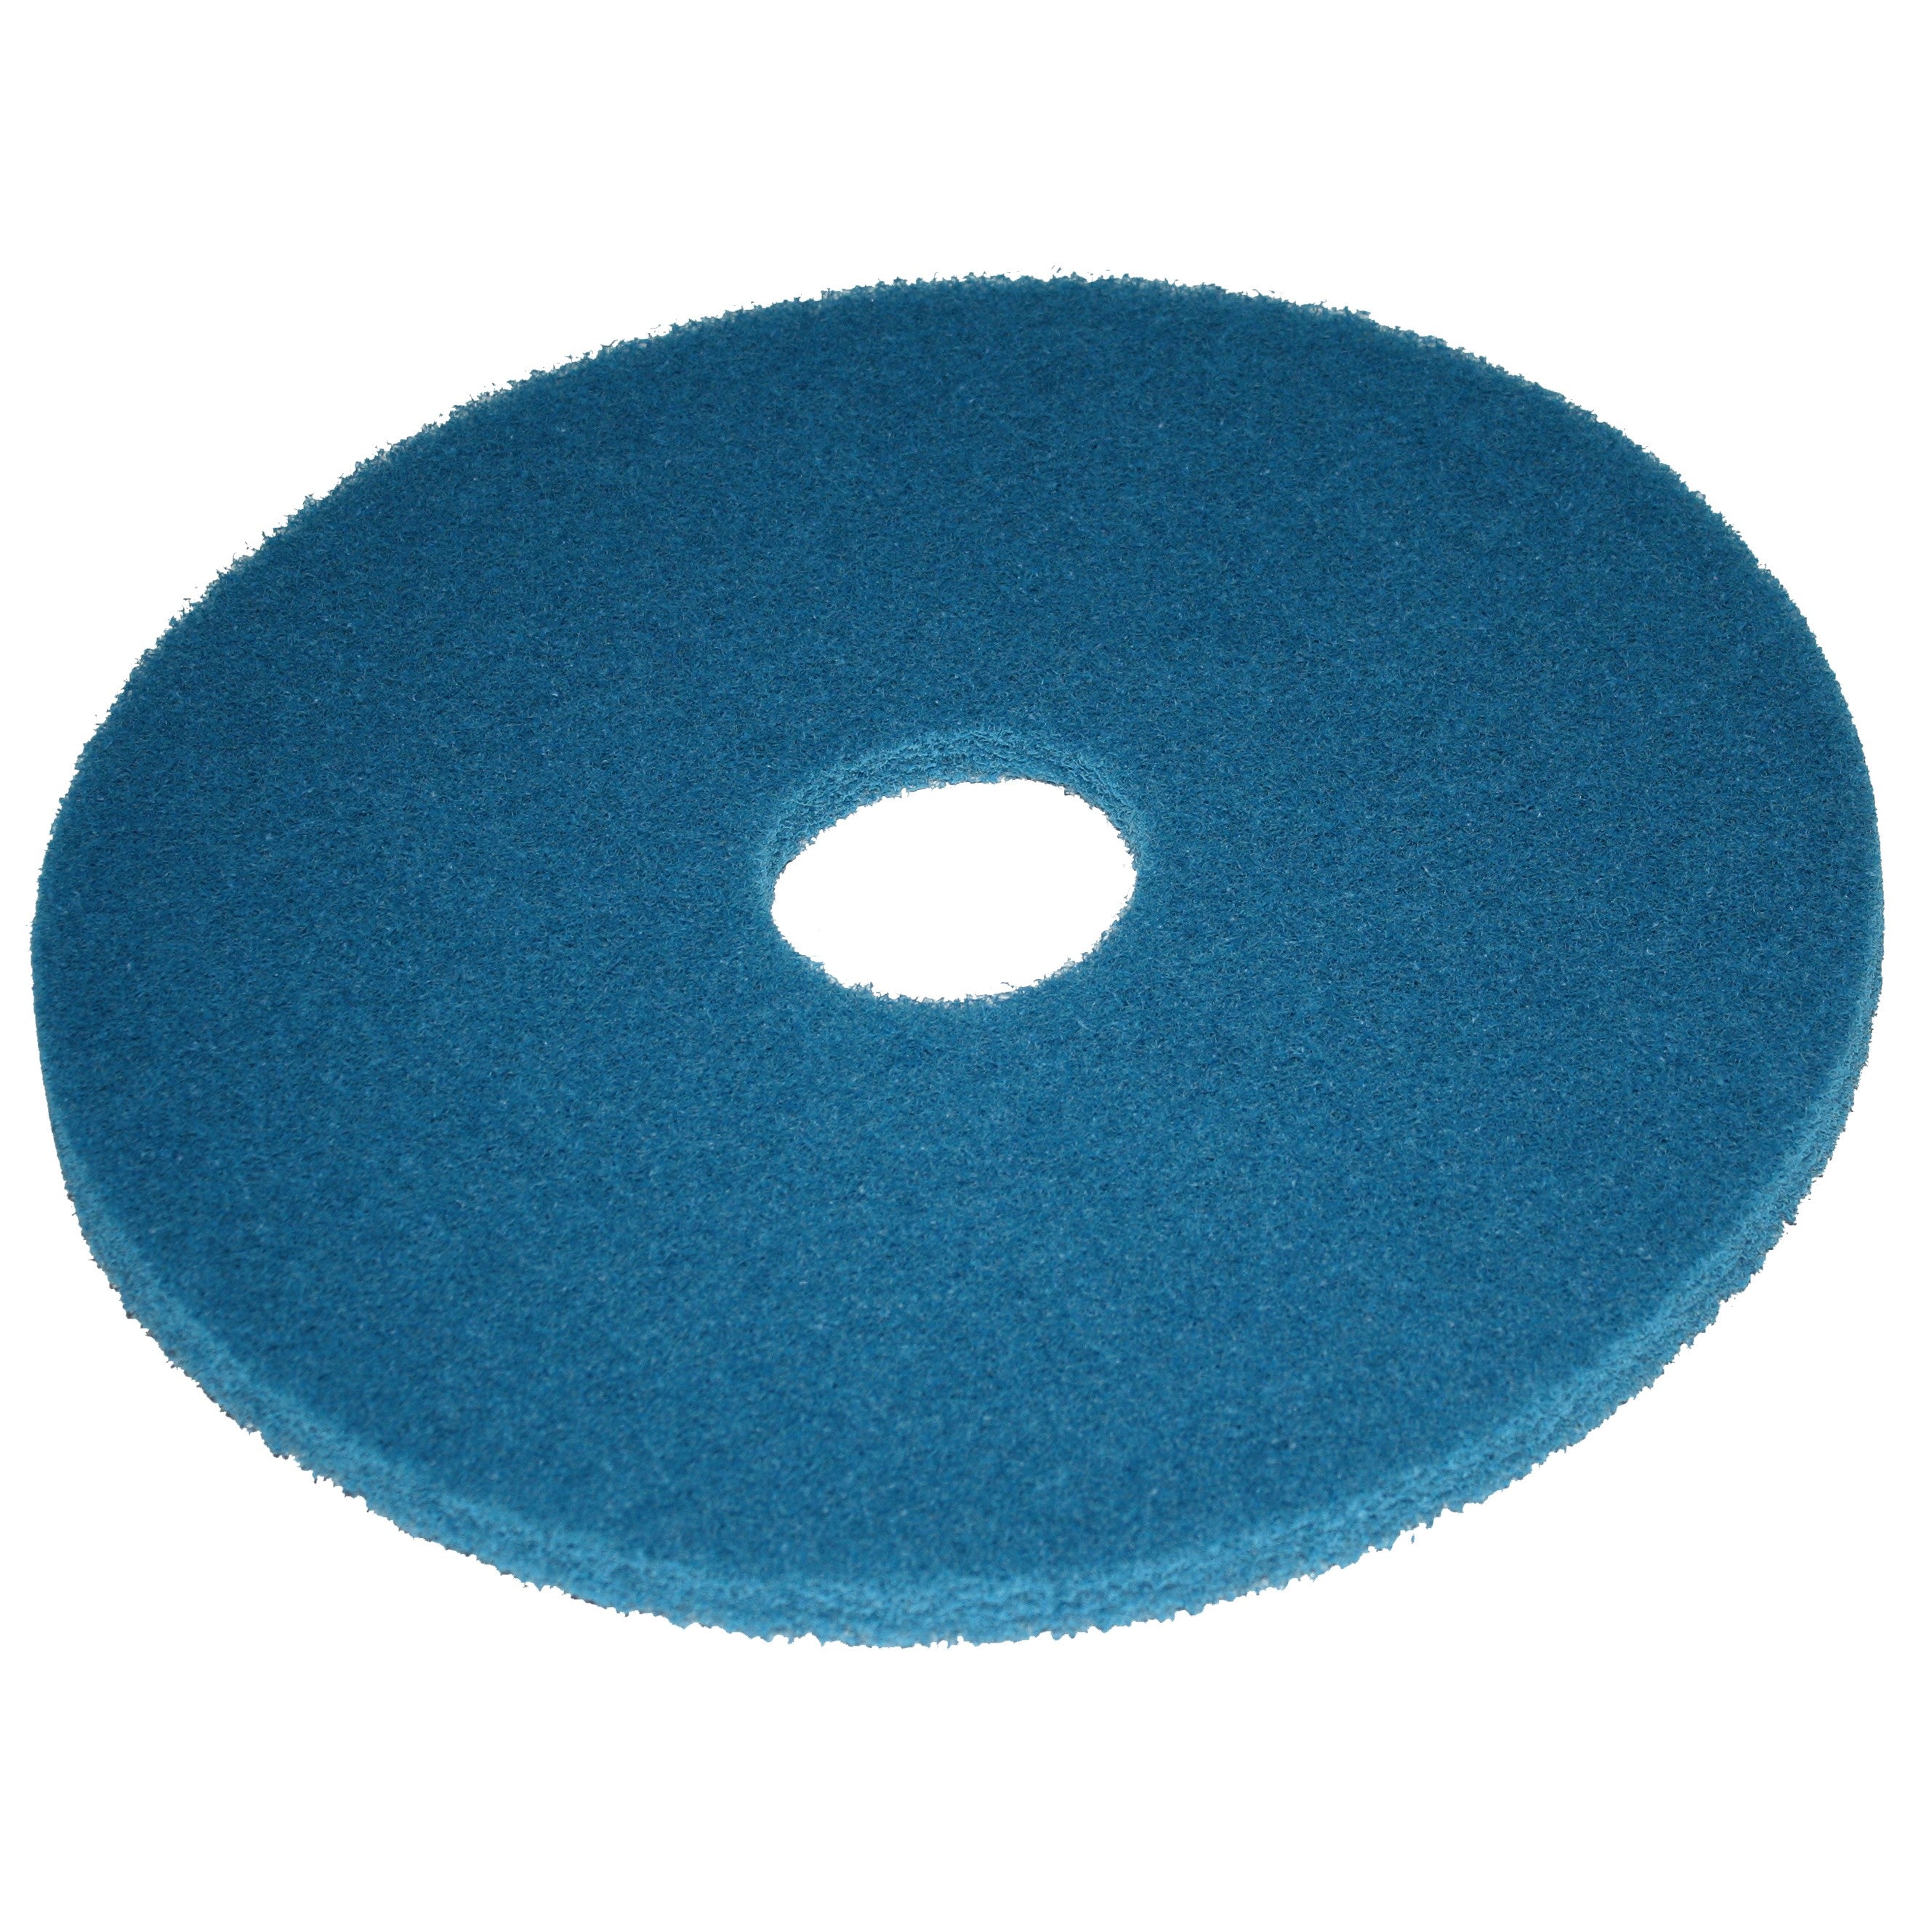 Pad blau, Ø 432 mm, Polyester